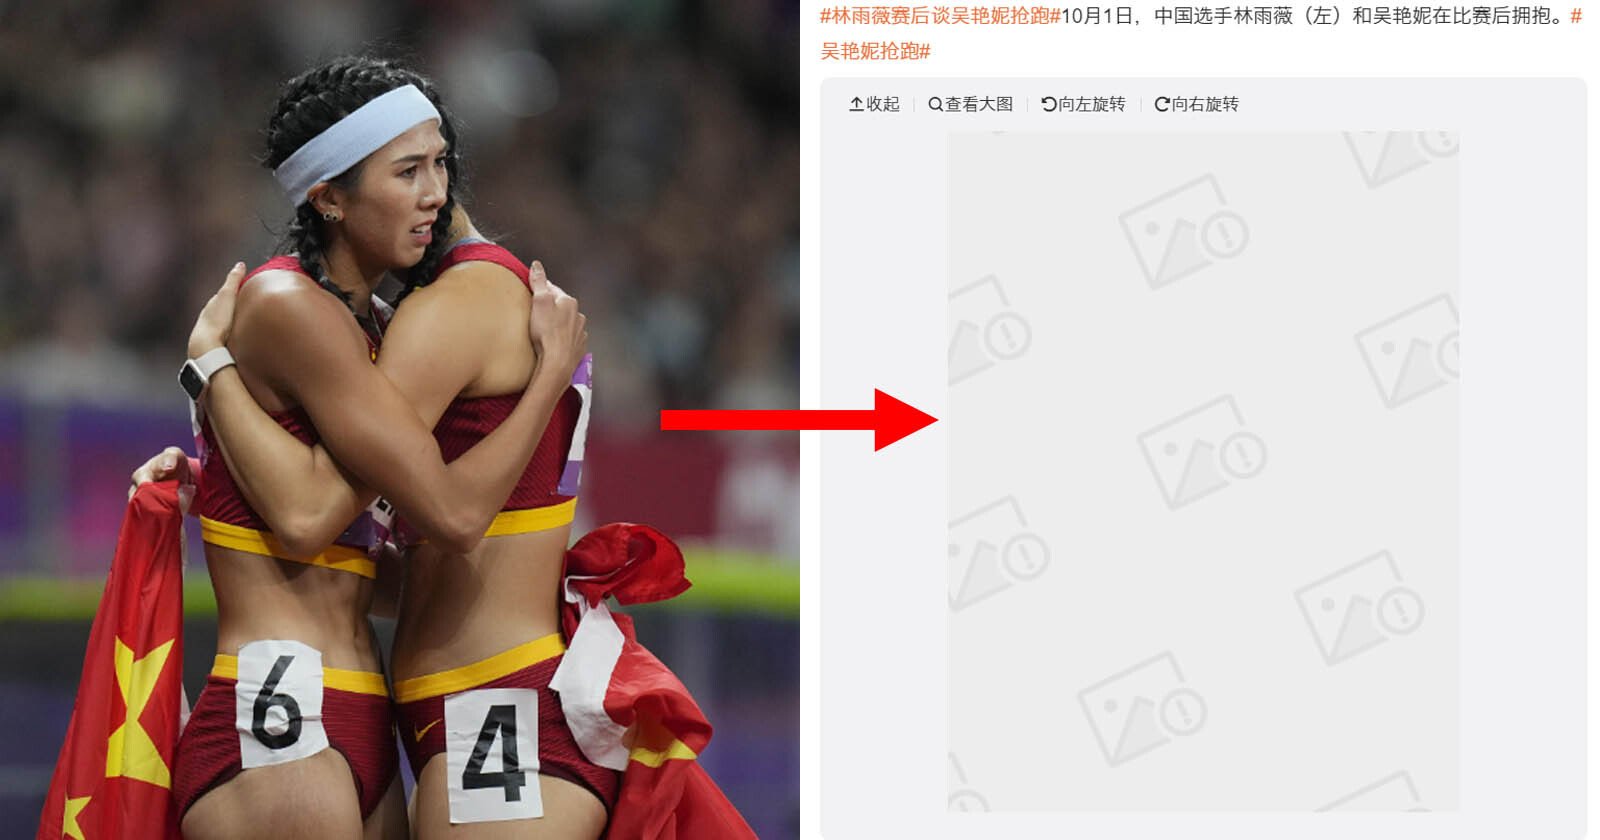  china censors sports photo because accidental tinanamen square 